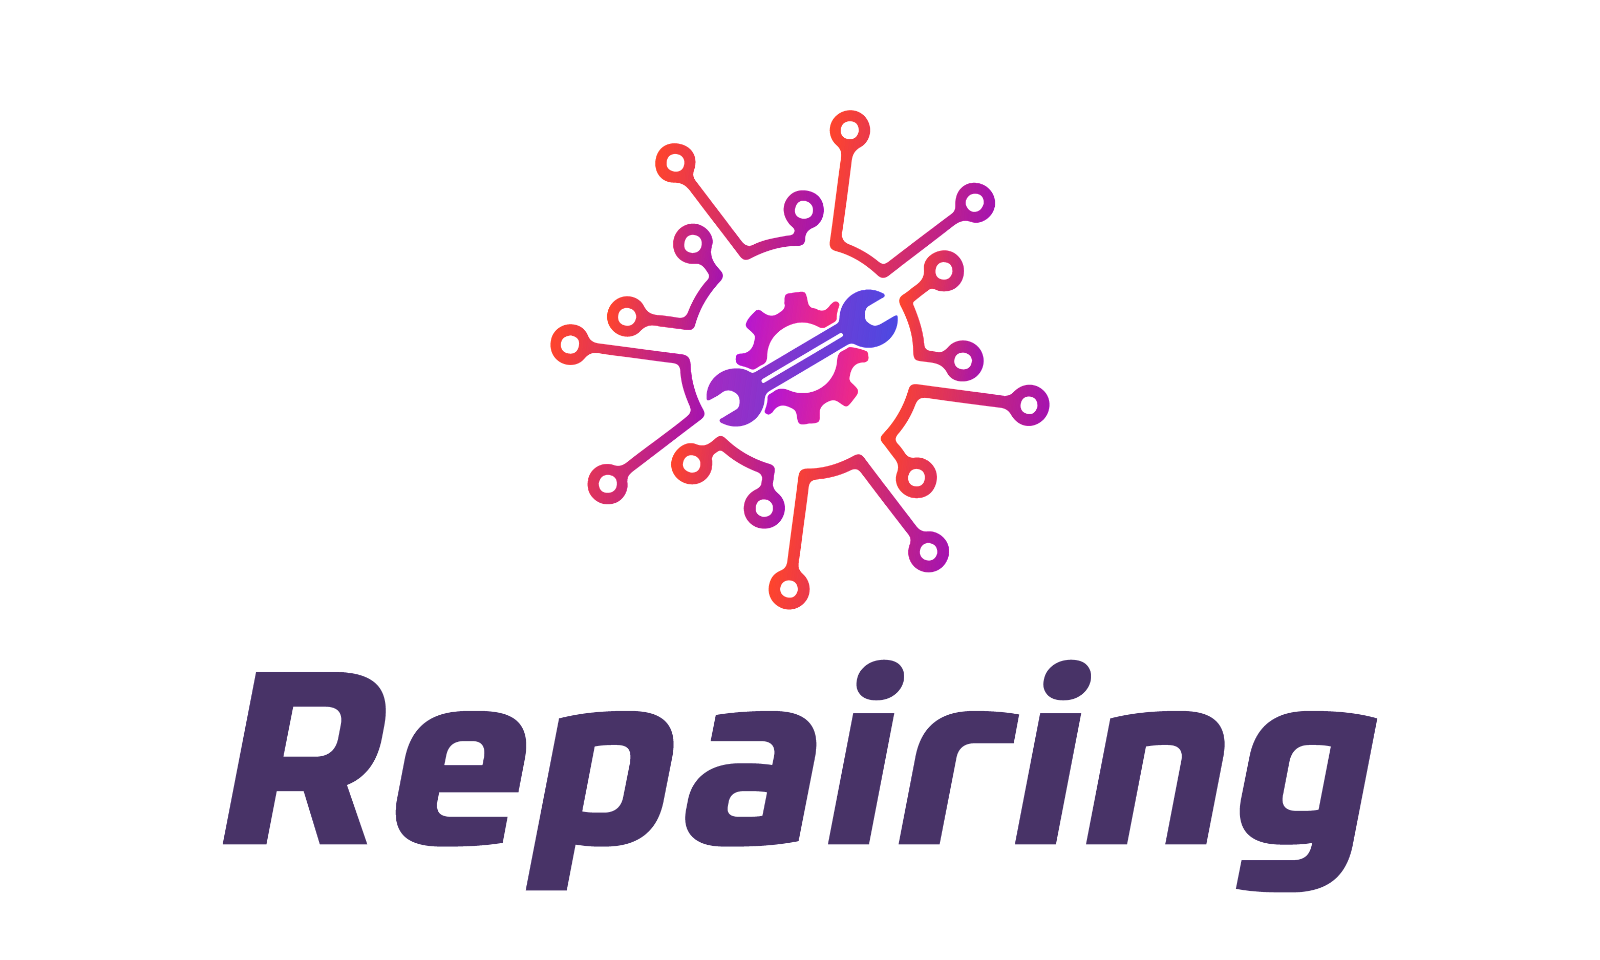 Repairing.ai - Creative brandable domain for sale